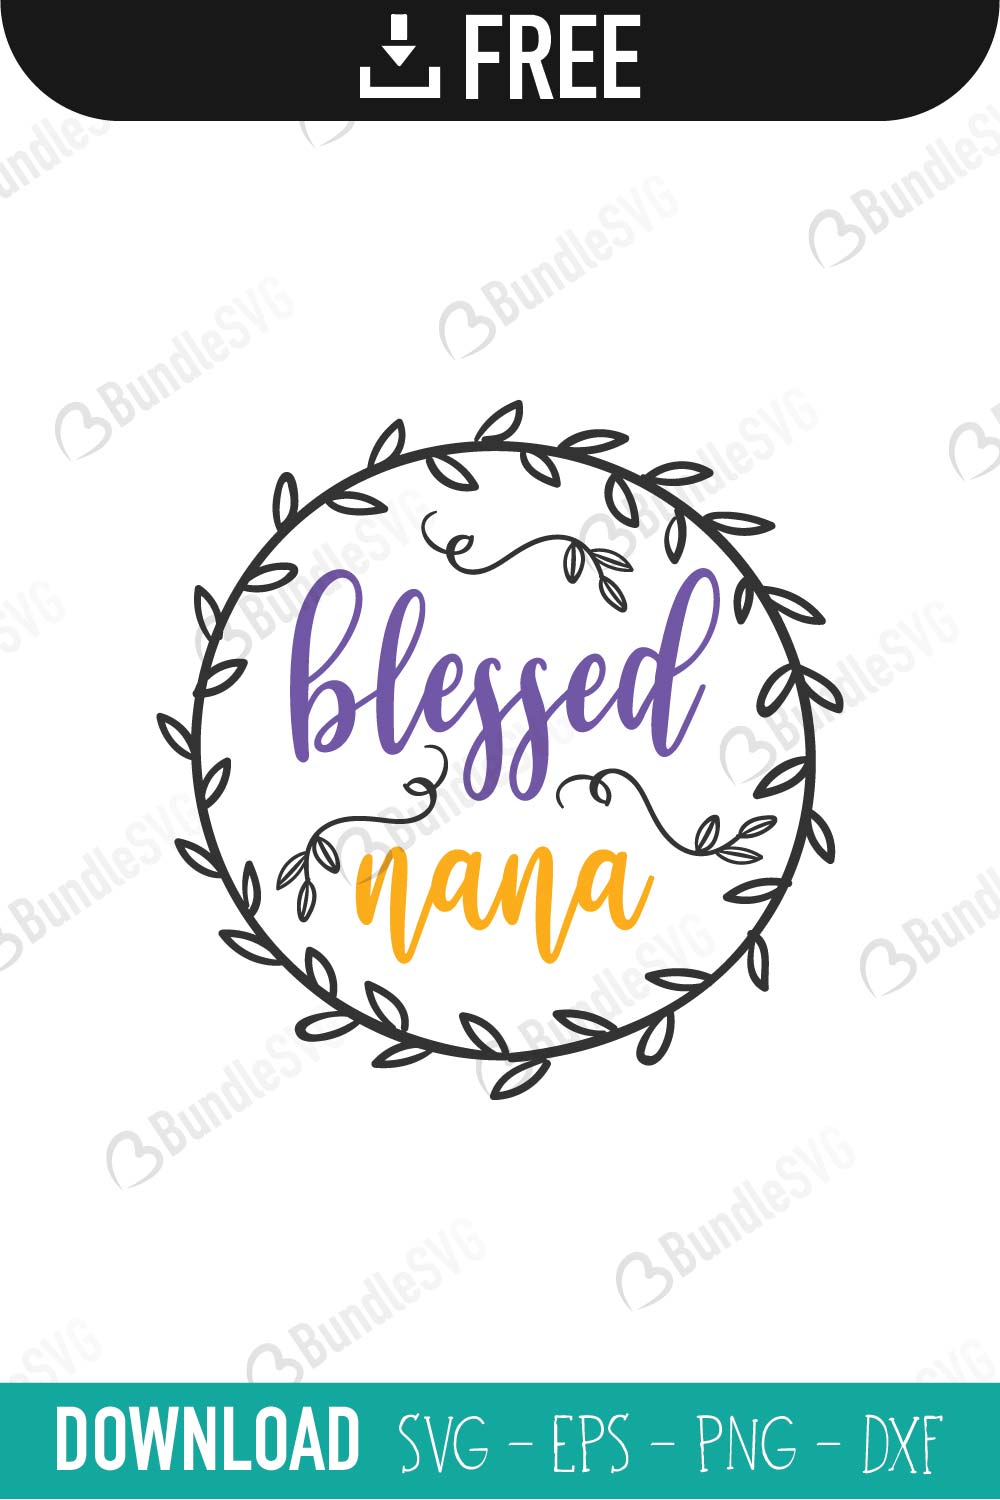 Blessed Nana Svg Cut Files Free Download Bundlesvg